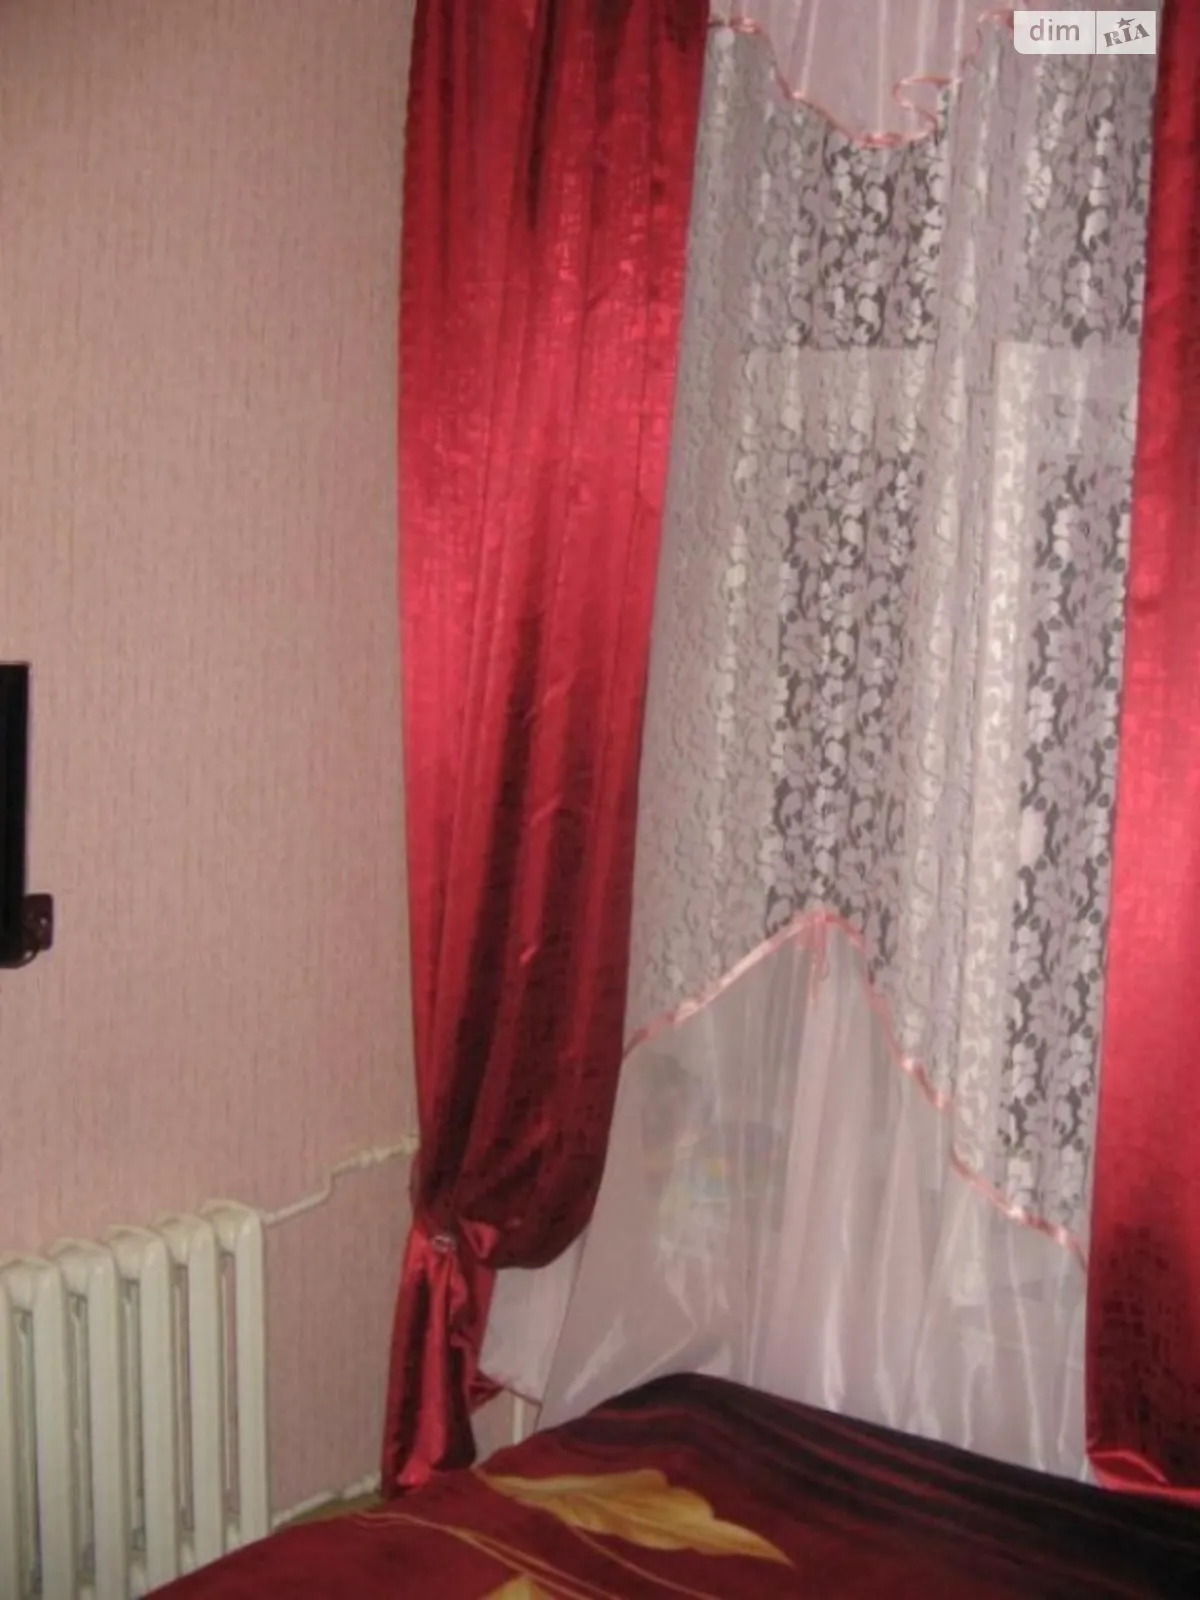 Продается комната 47.7 кв. м в Одессе, цена: 45000 $ - фото 1